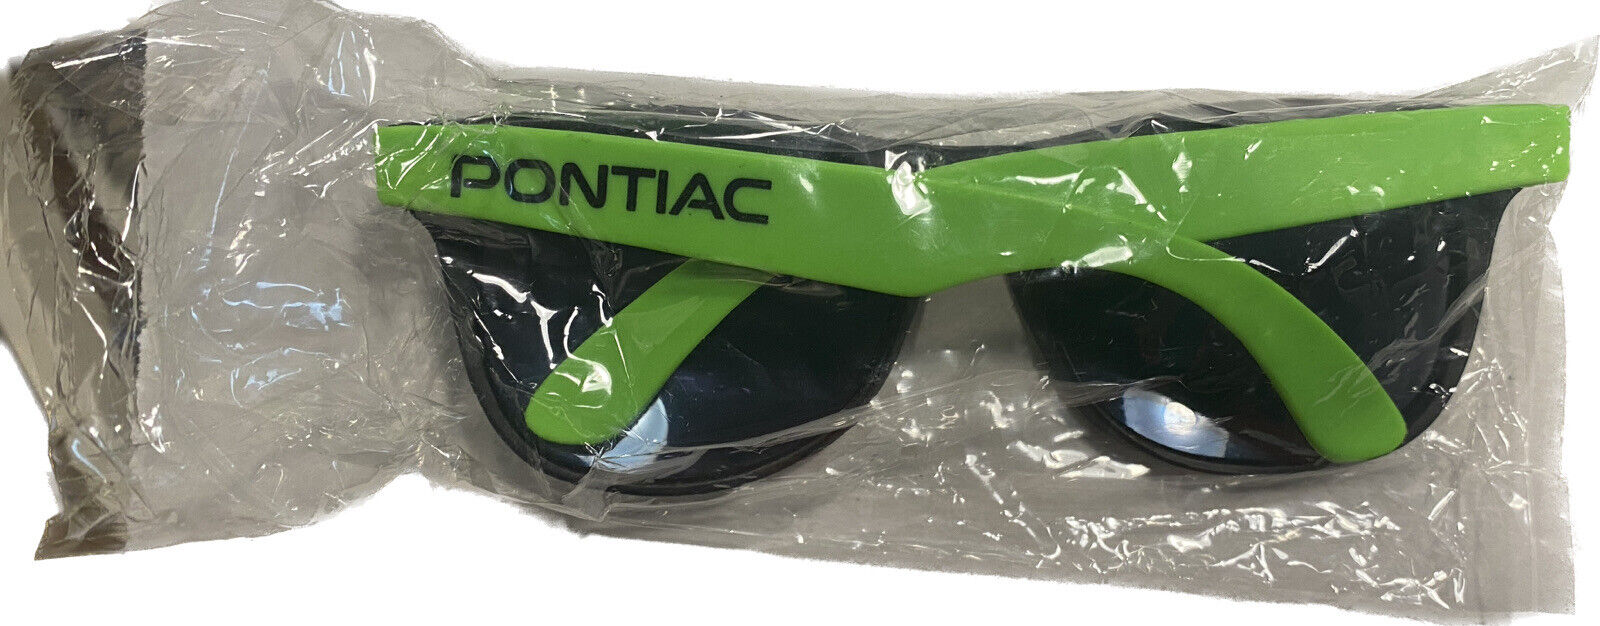 VTG Pontiac Promotional UV Sunglasses Neon Green, New Sealed, 1990’s C